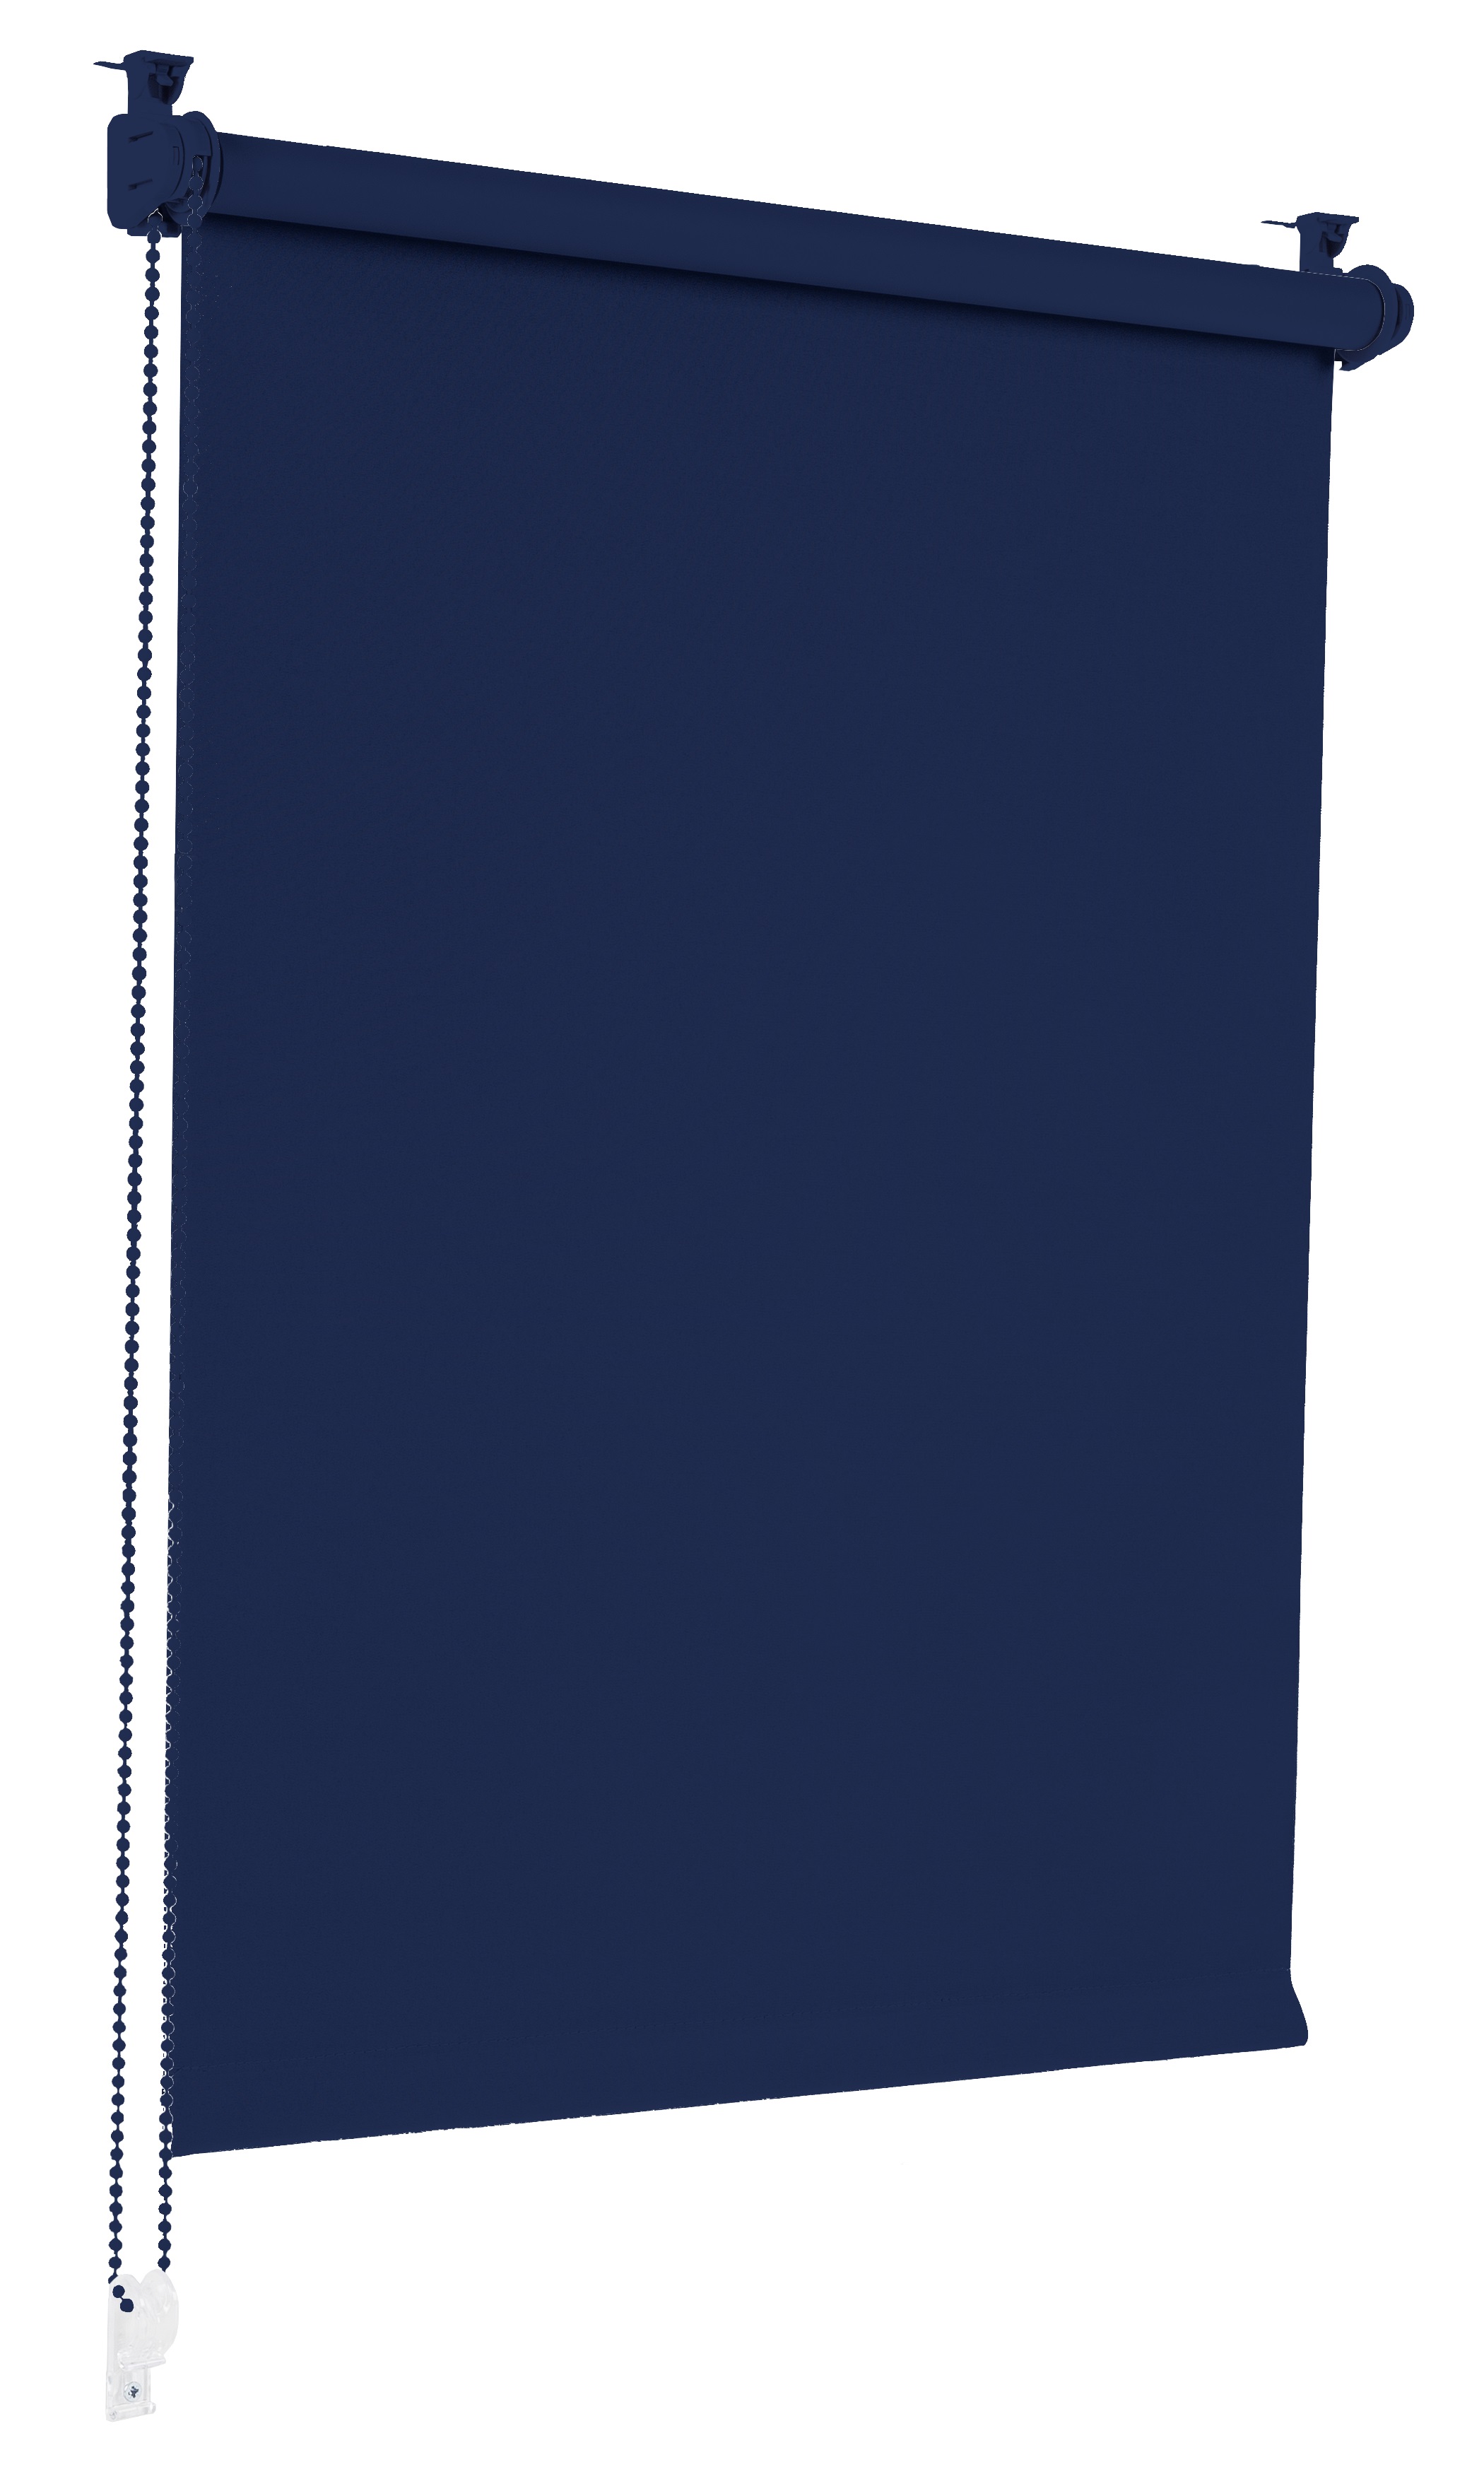 SONELLO Verdunkelungsrollo dunkelblau 110cm x 210cm